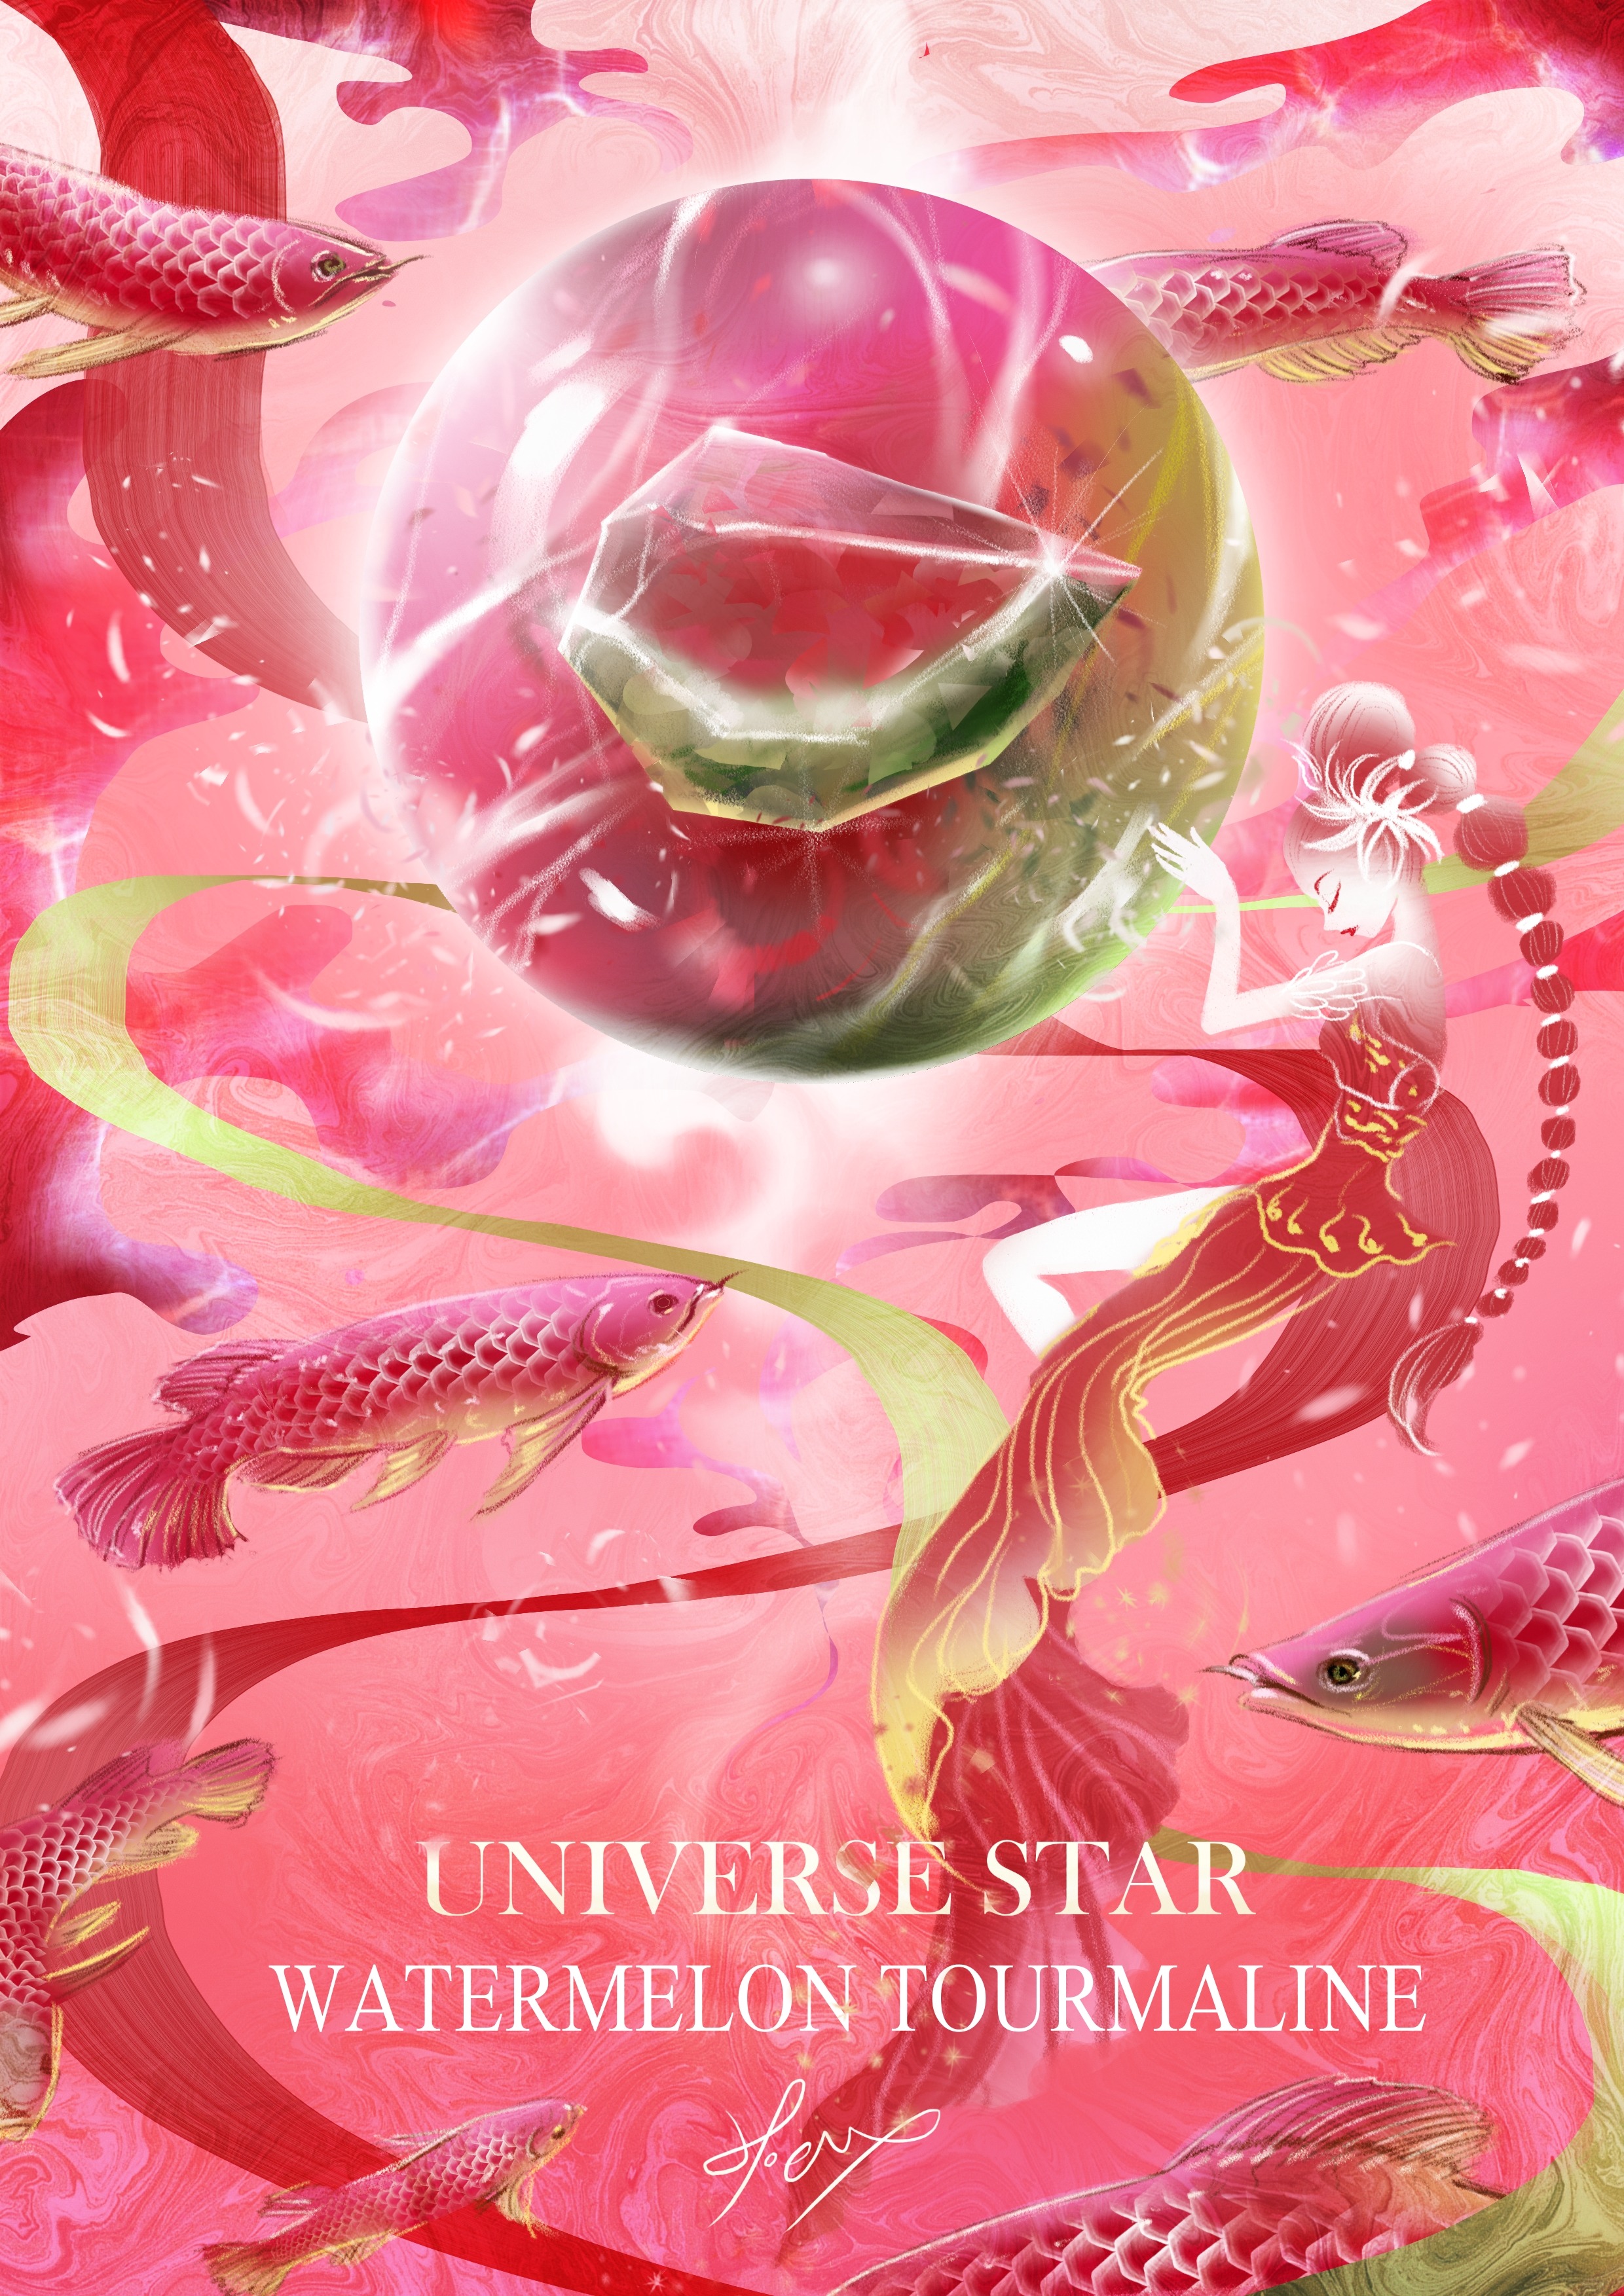 Universe Star 夢宇宙星球-西瓜碧璽星Watermelon tourmaline-Hoelex.jpg